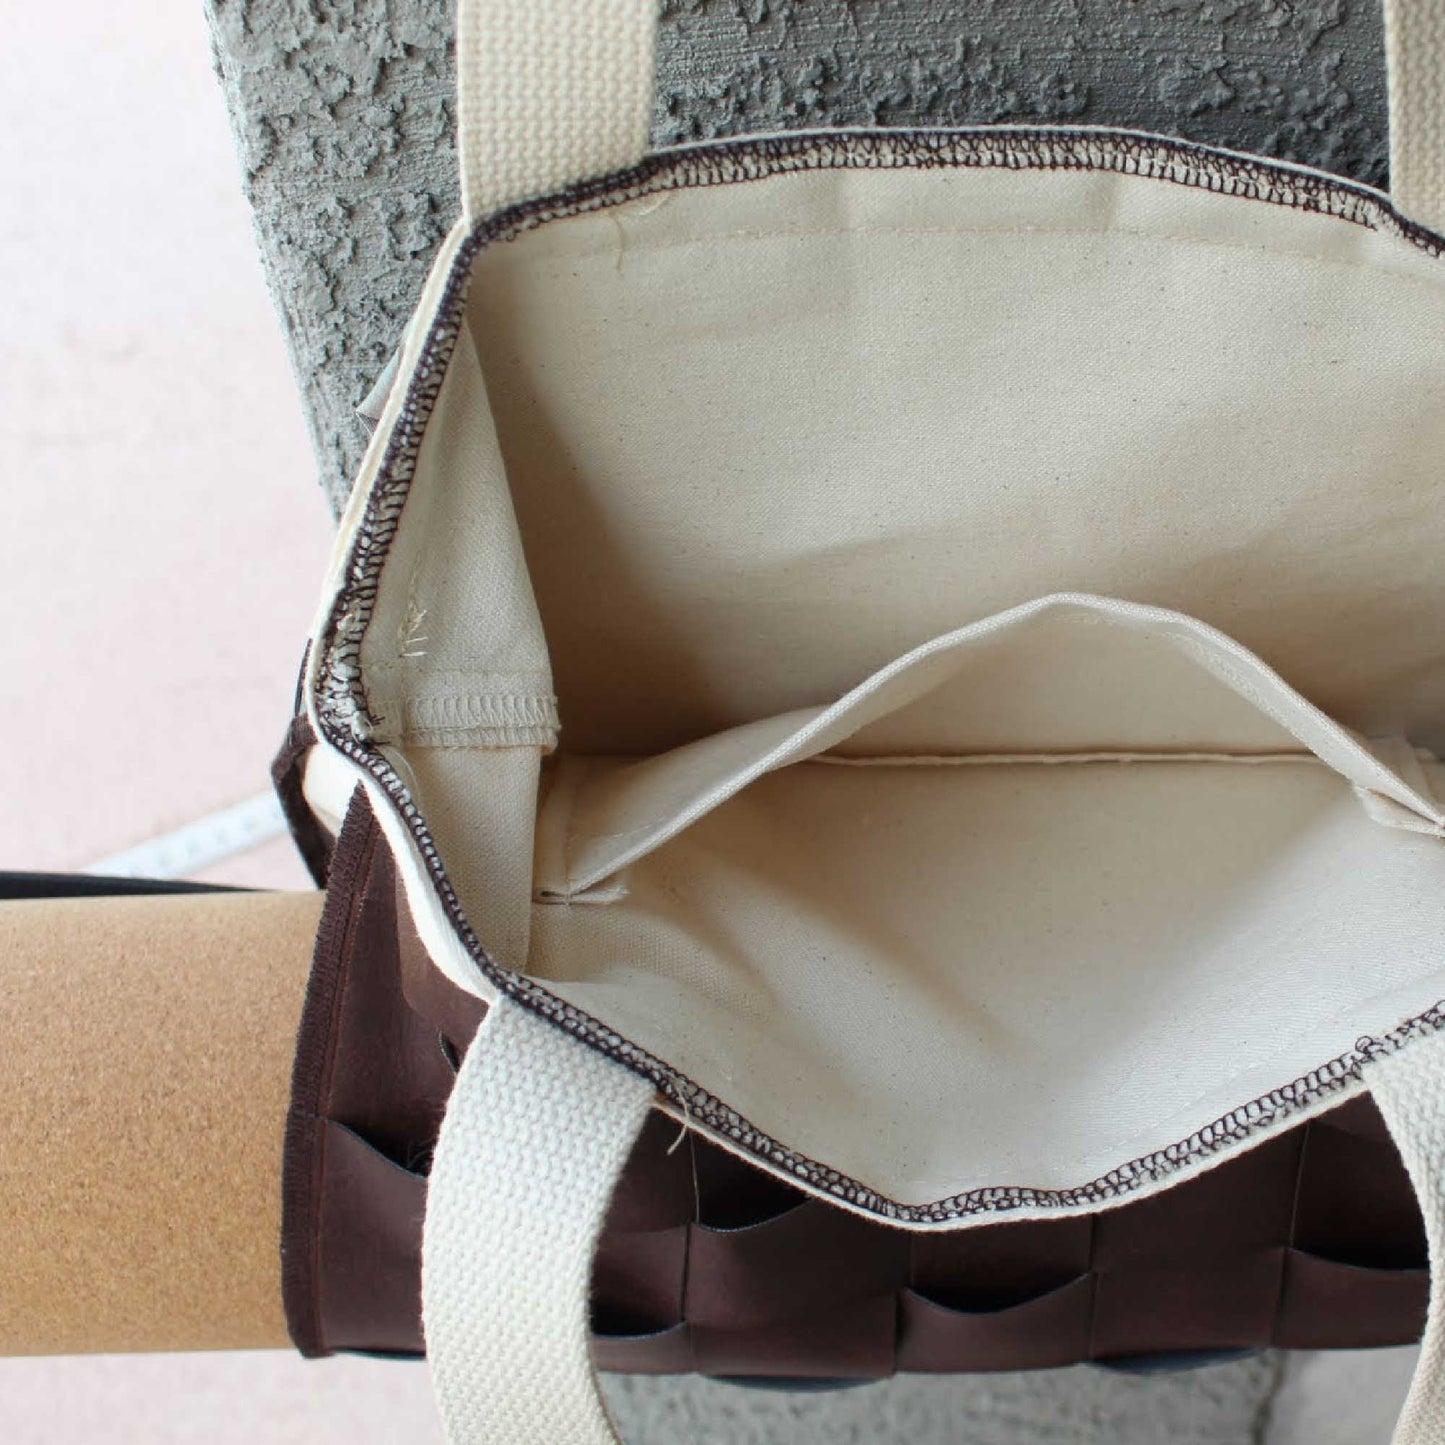 inside vegan leather yoga Mat carrier bag with tote bag